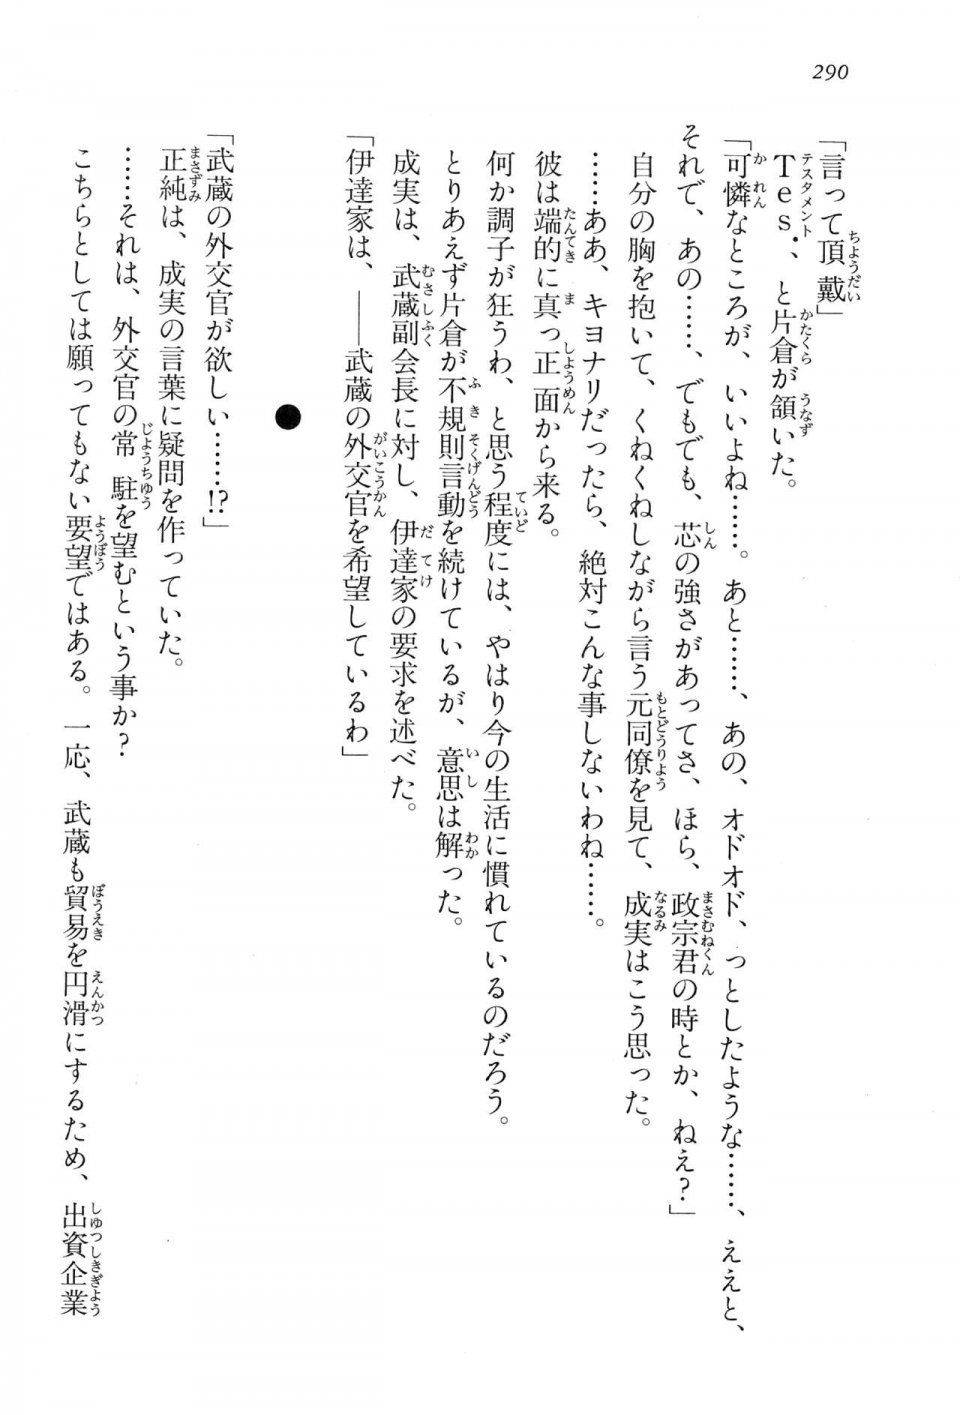 Kyoukai Senjou no Horizon LN Vol 15(6C) Part 1 - Photo #290